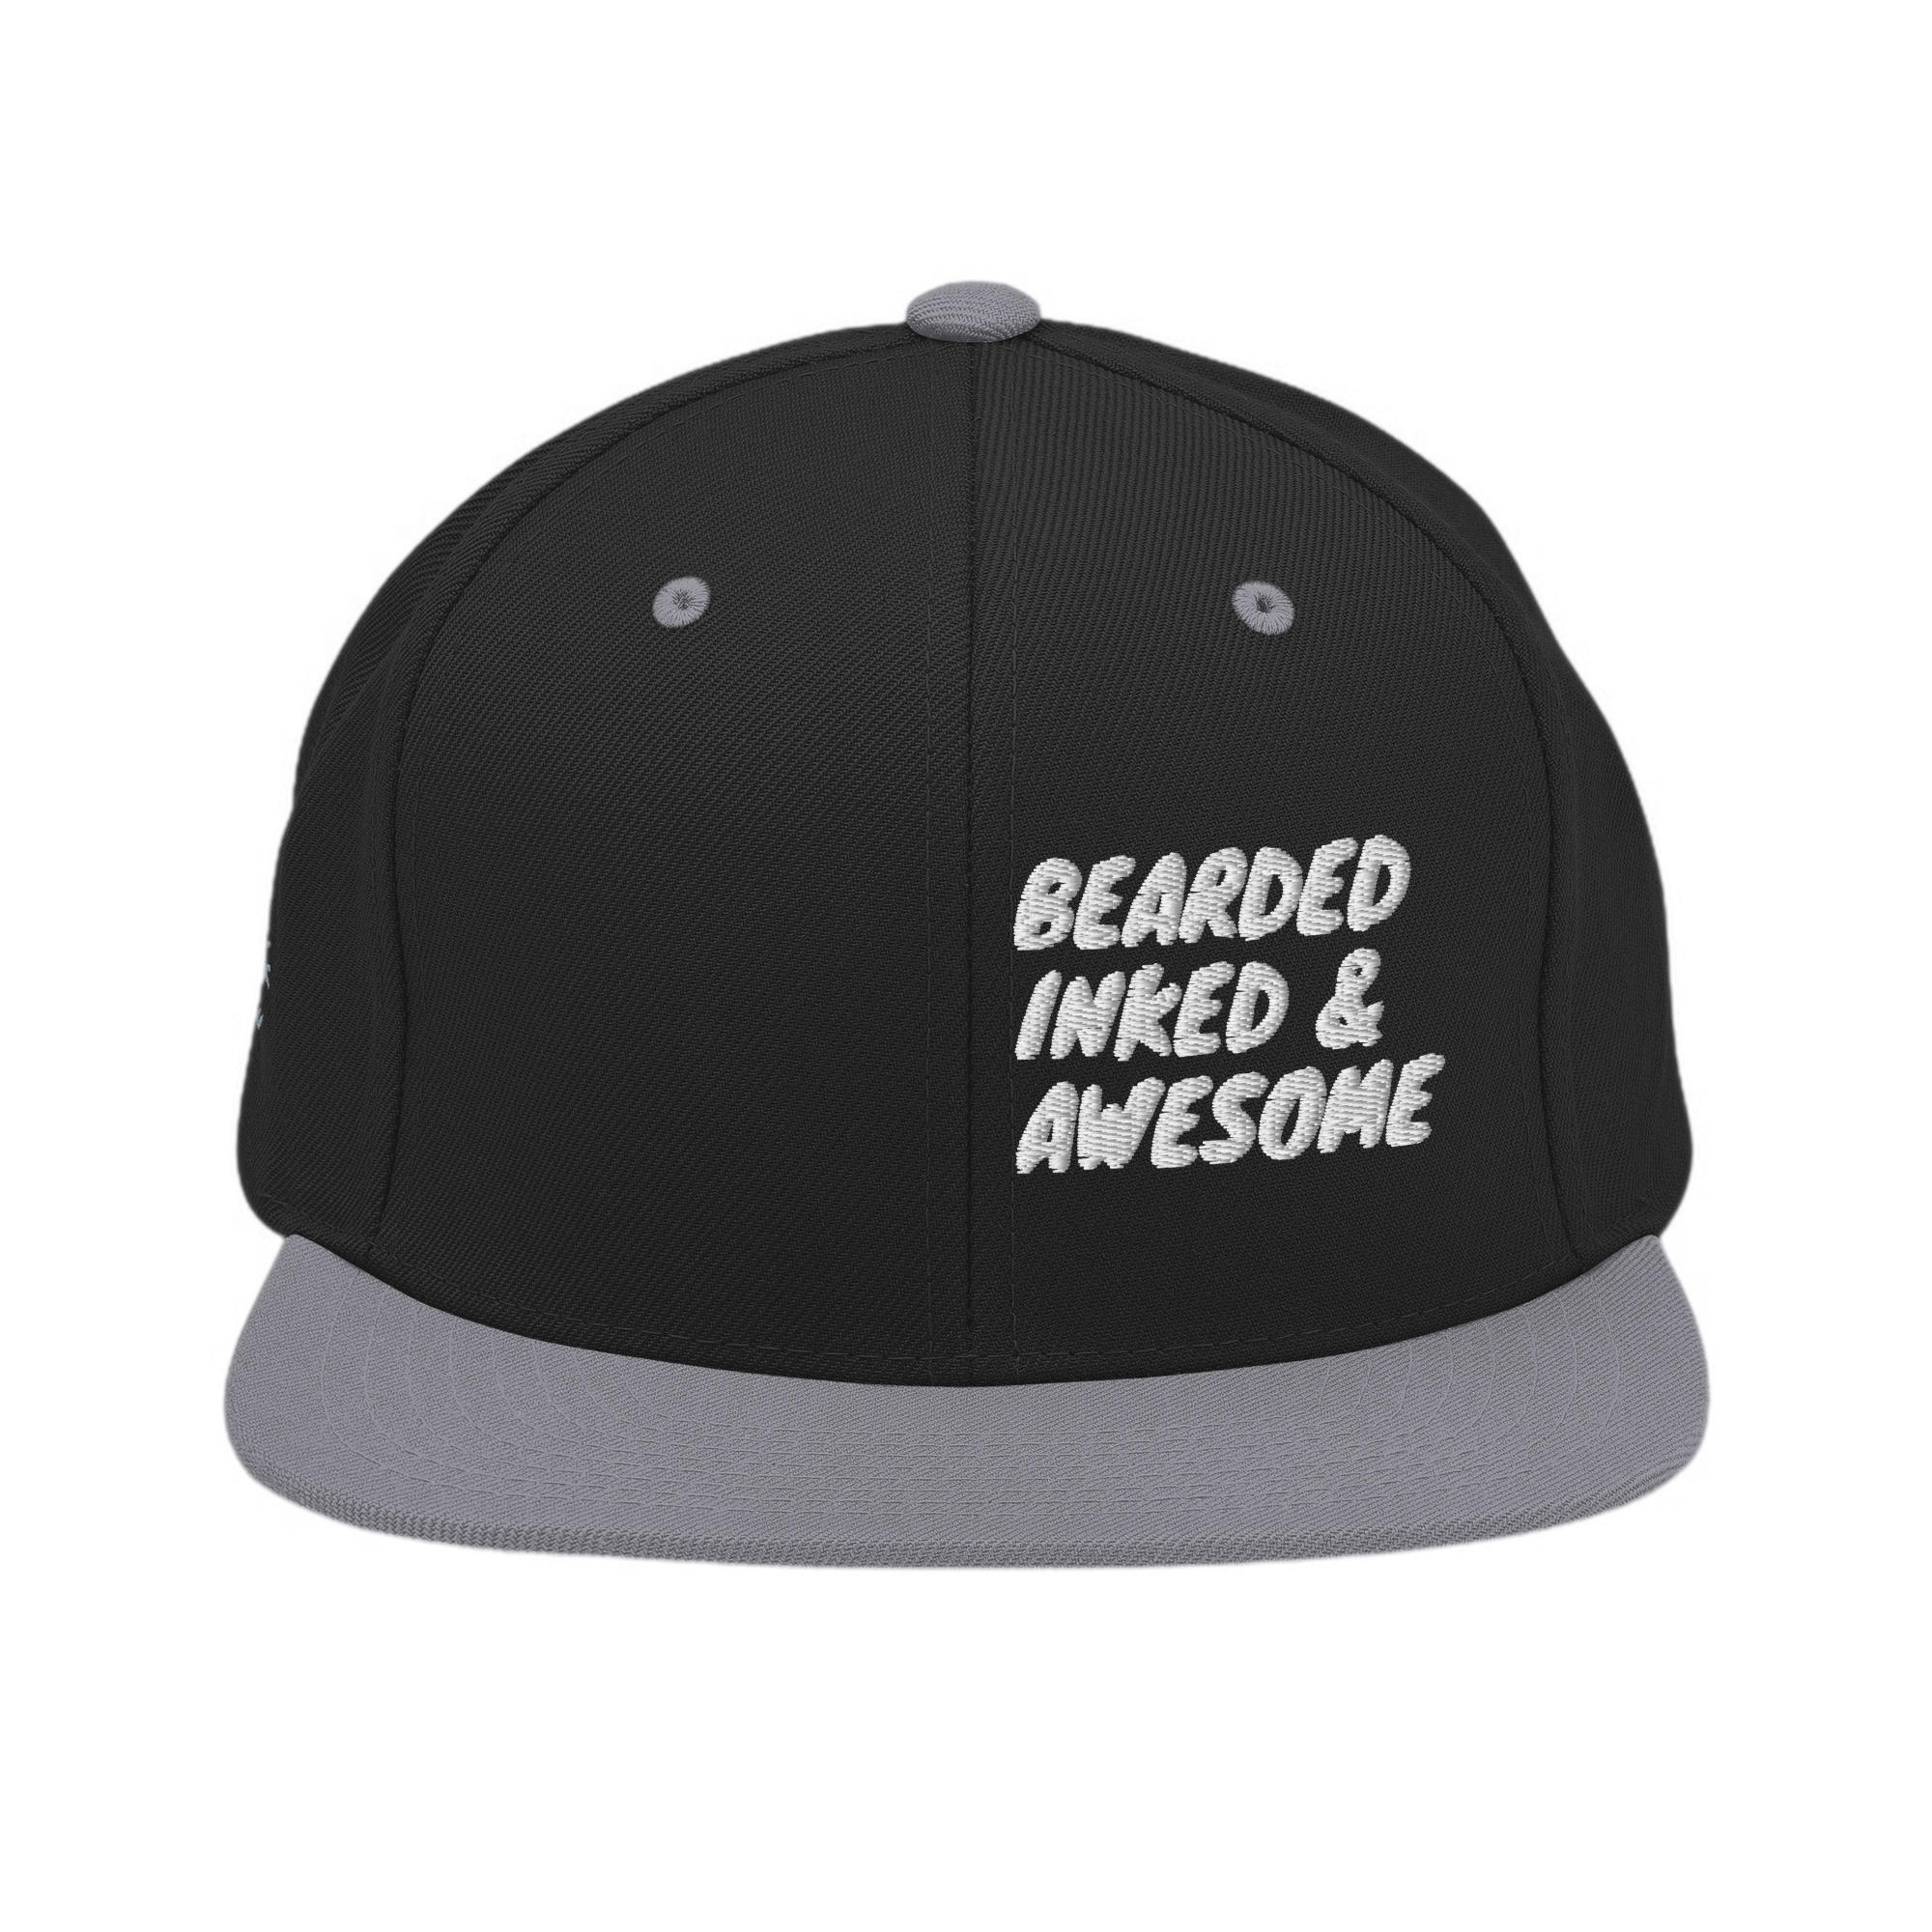 brnswk-style-inked-bearded-awesome-snapback-cap